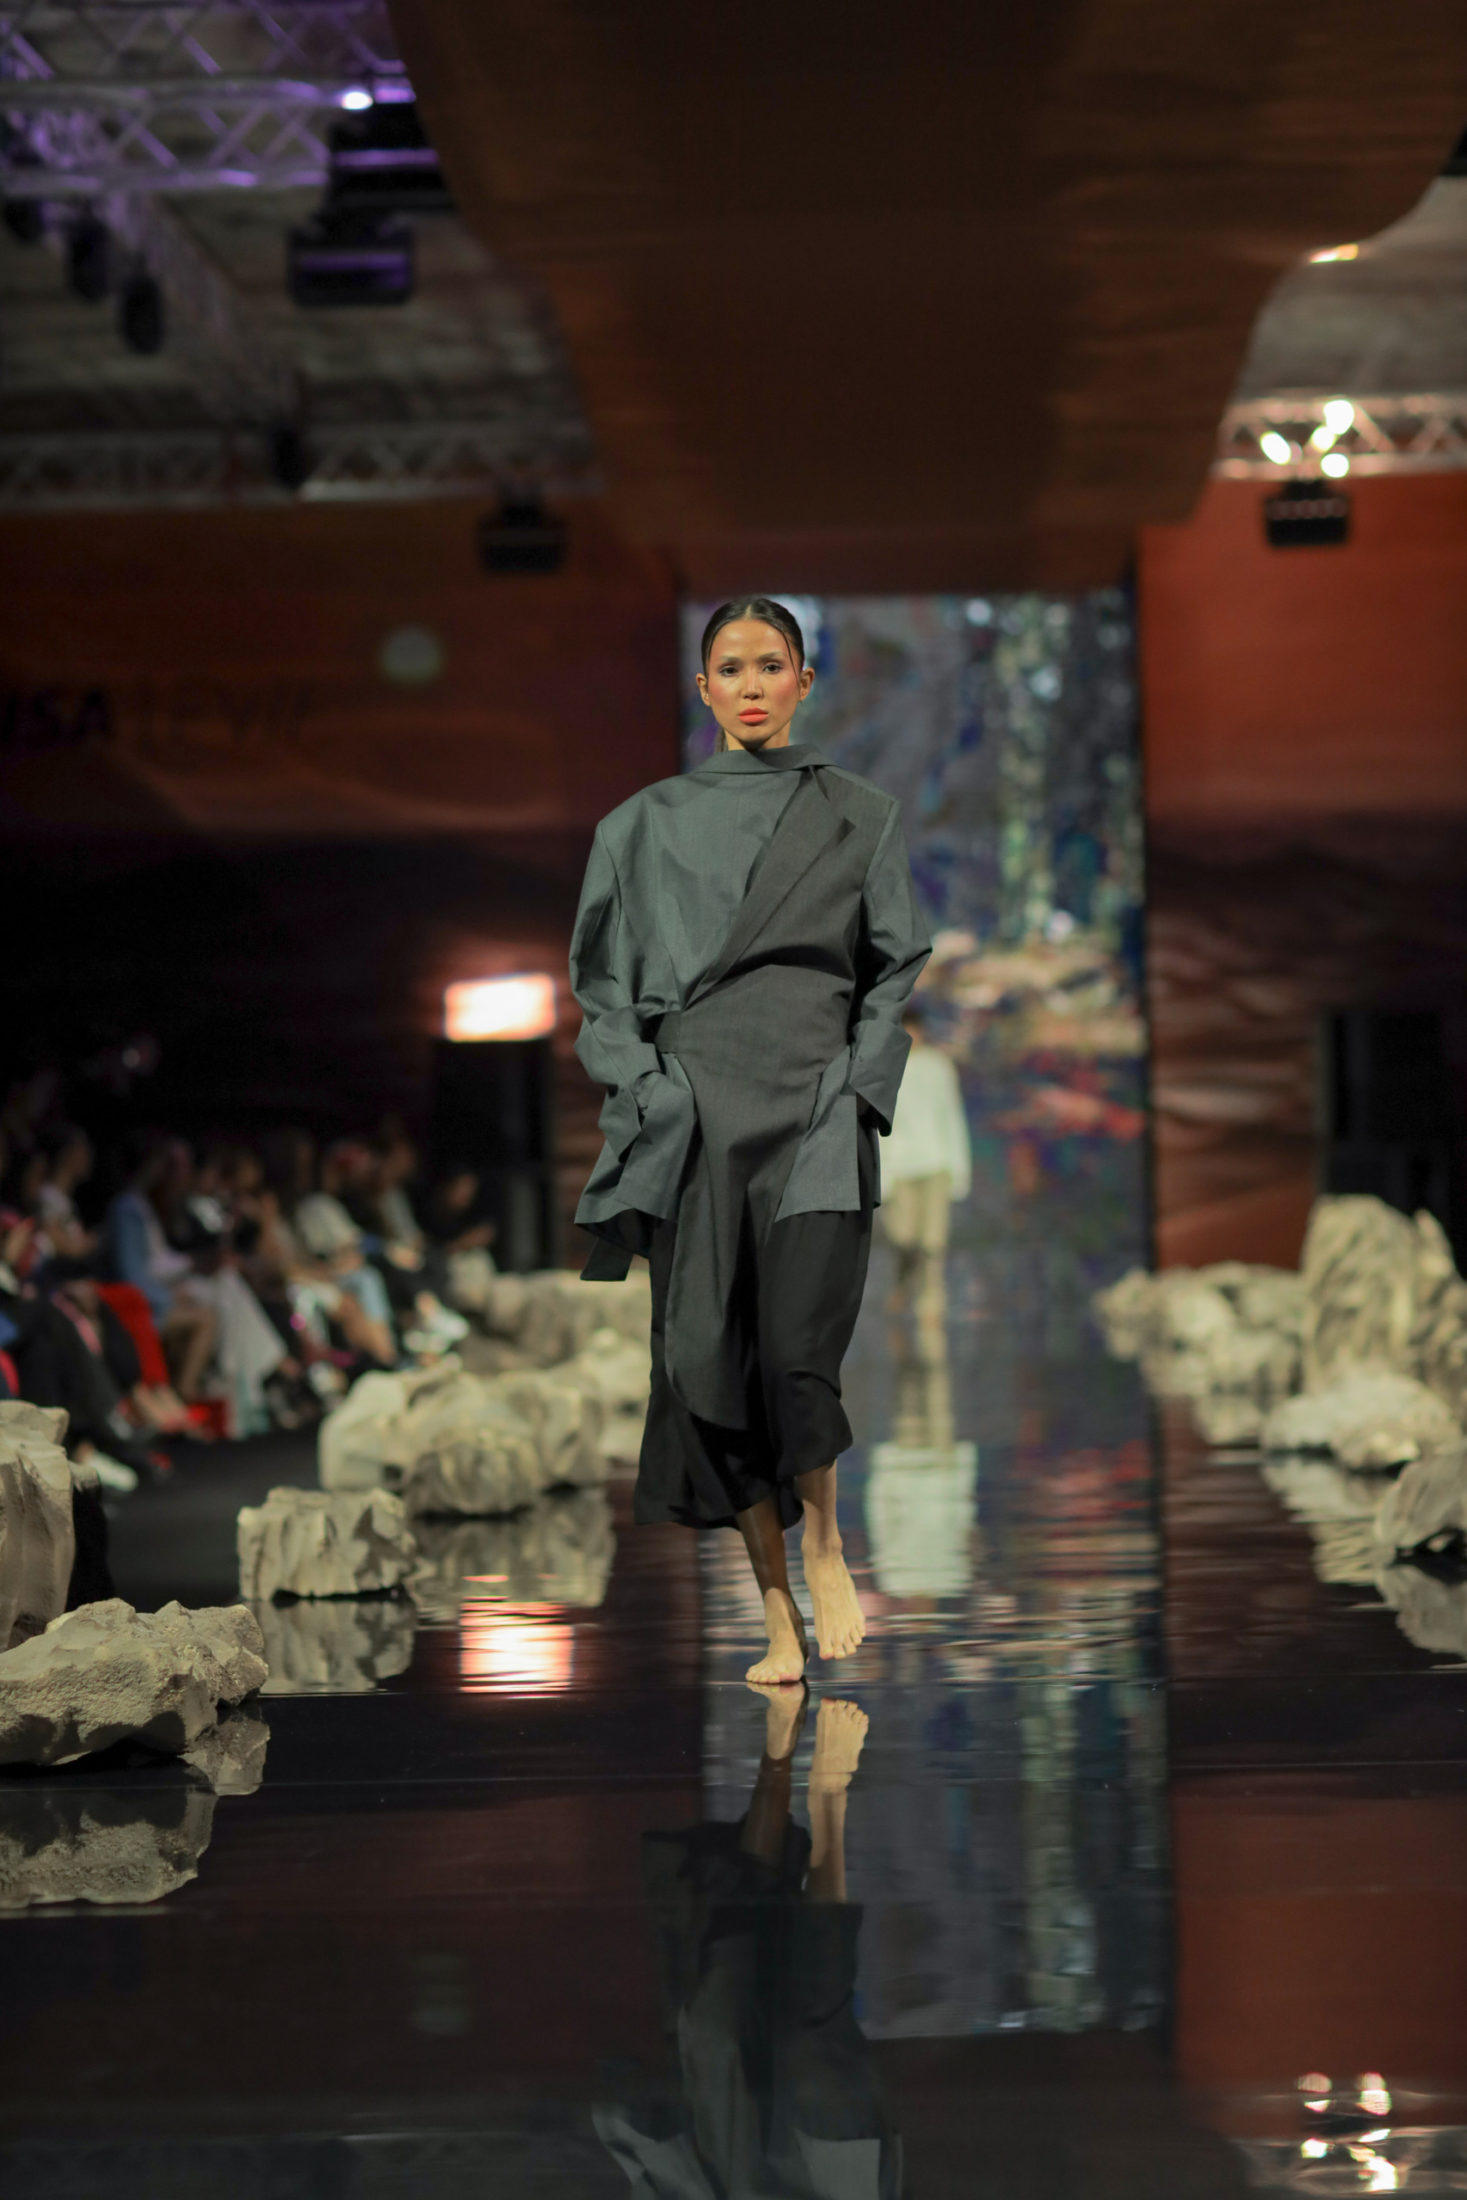 VISA Fashion Week Almaty